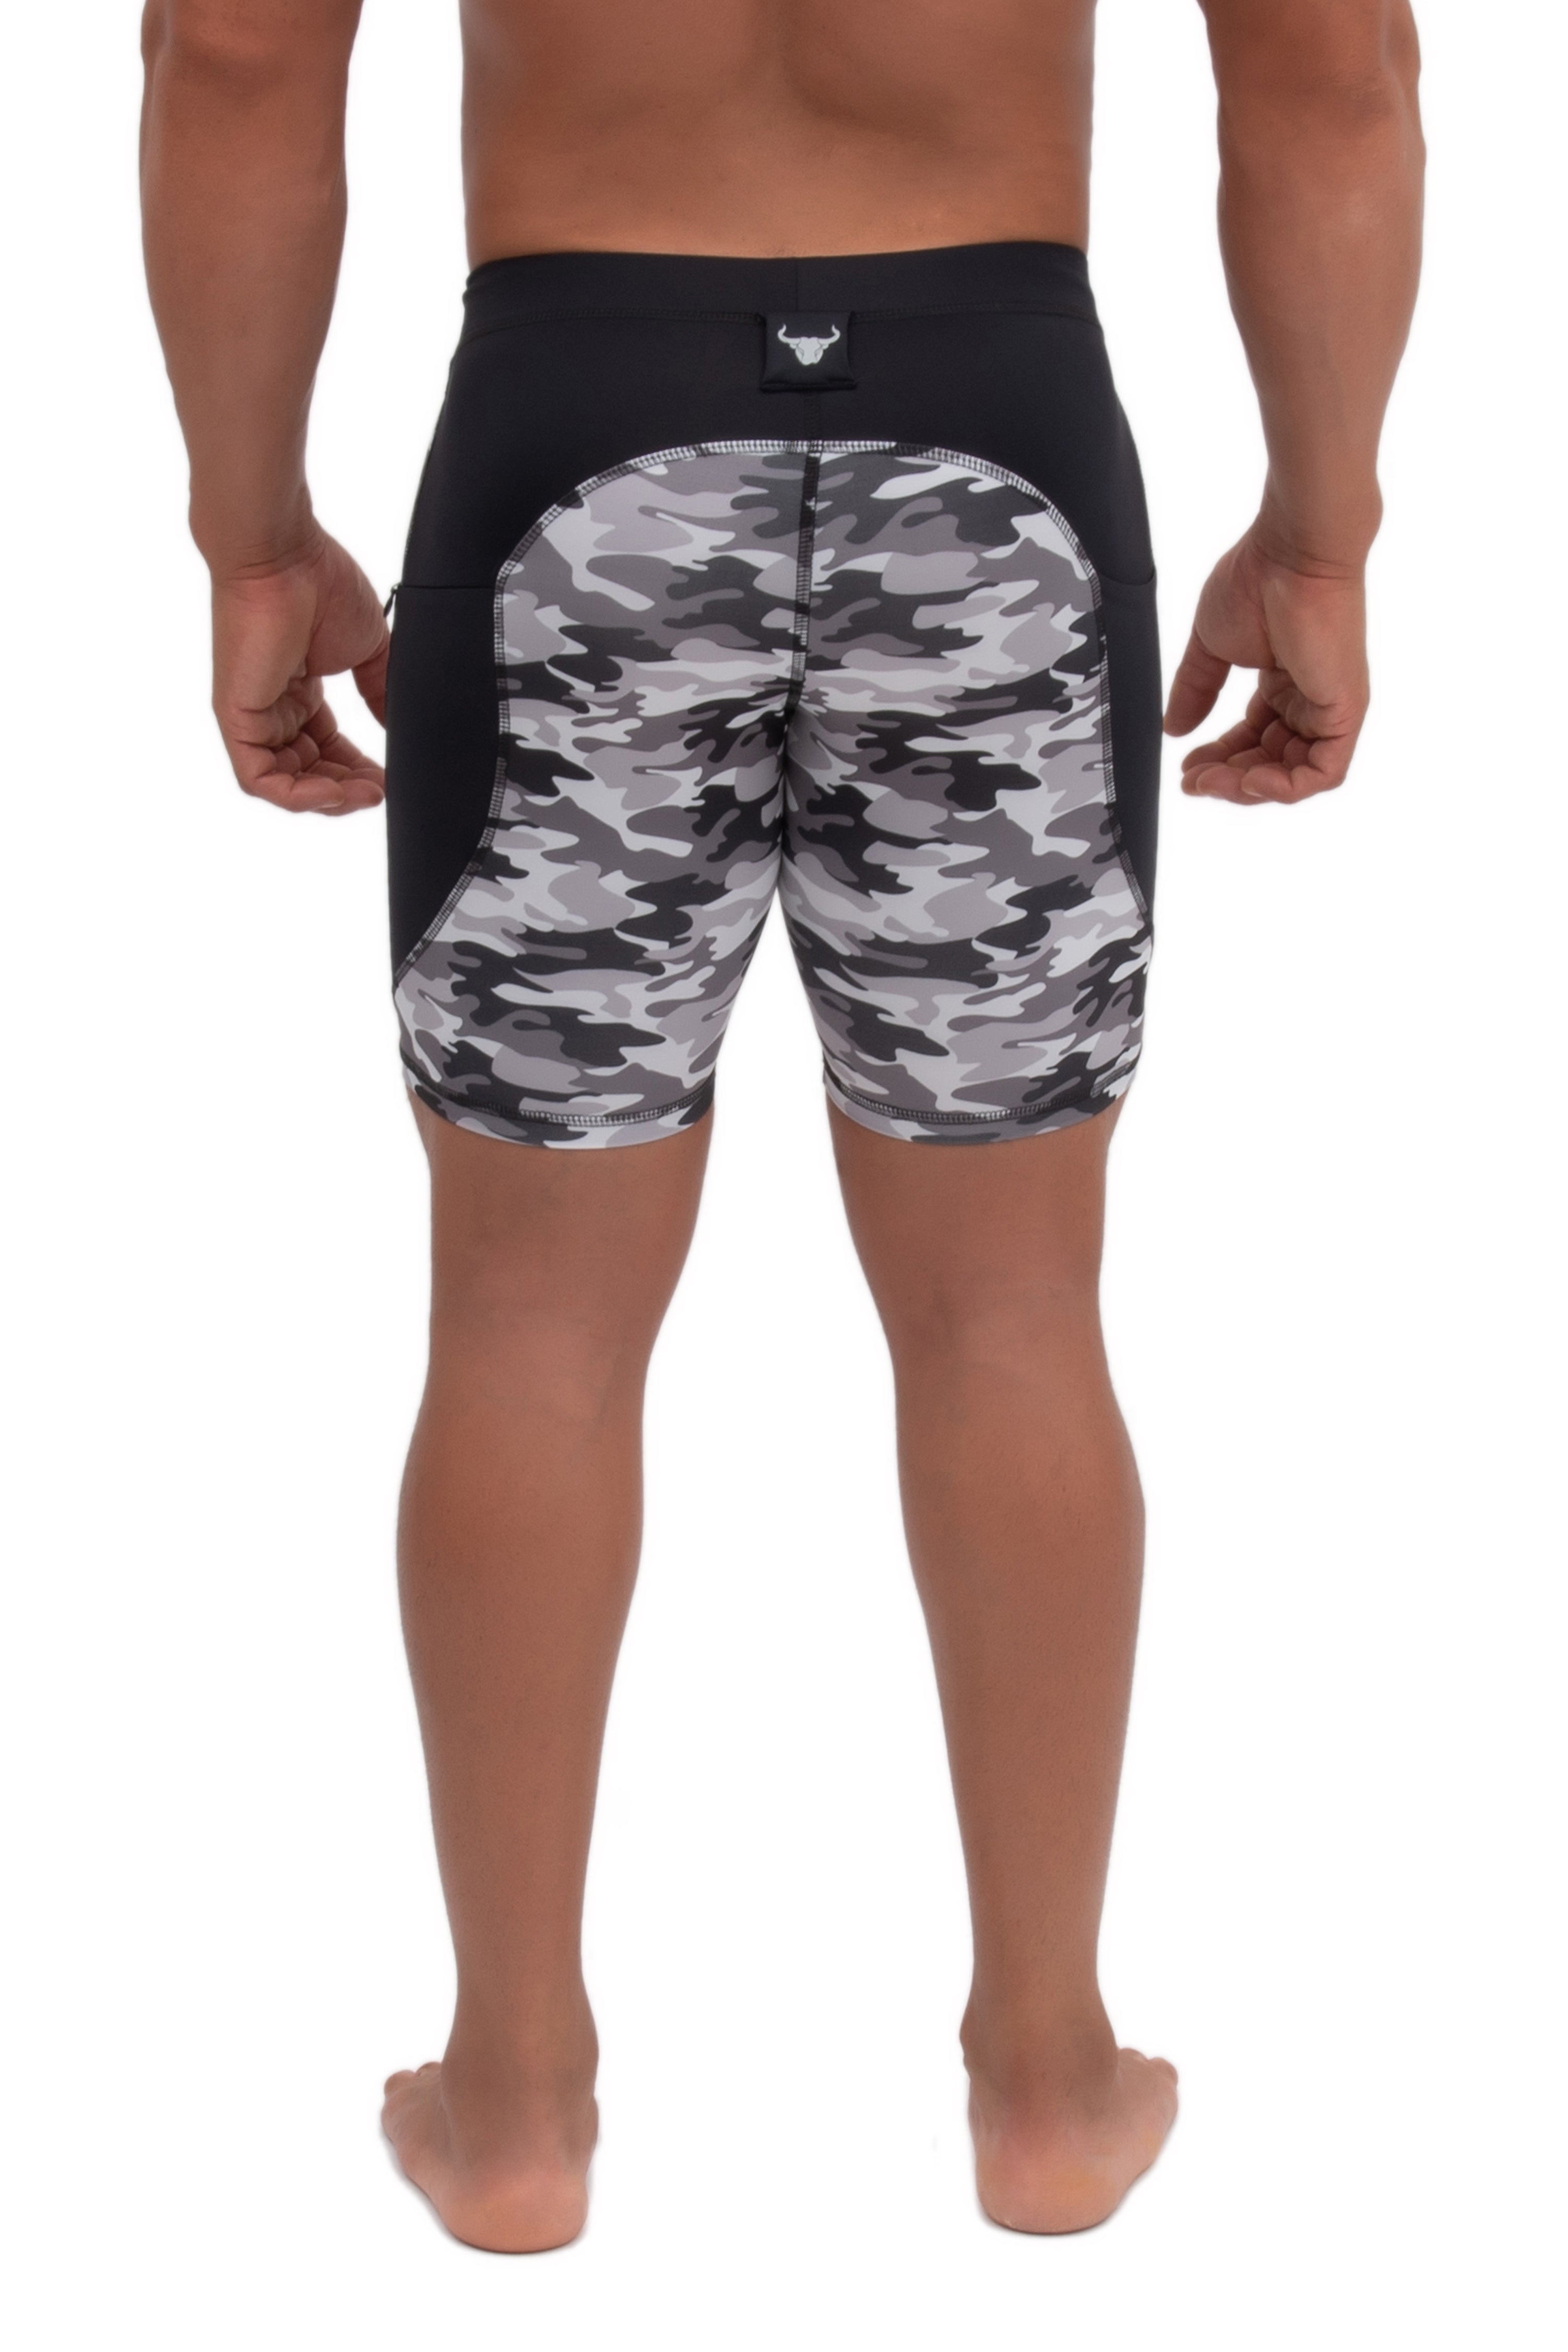 Men's Gray Camo Compression Shorts